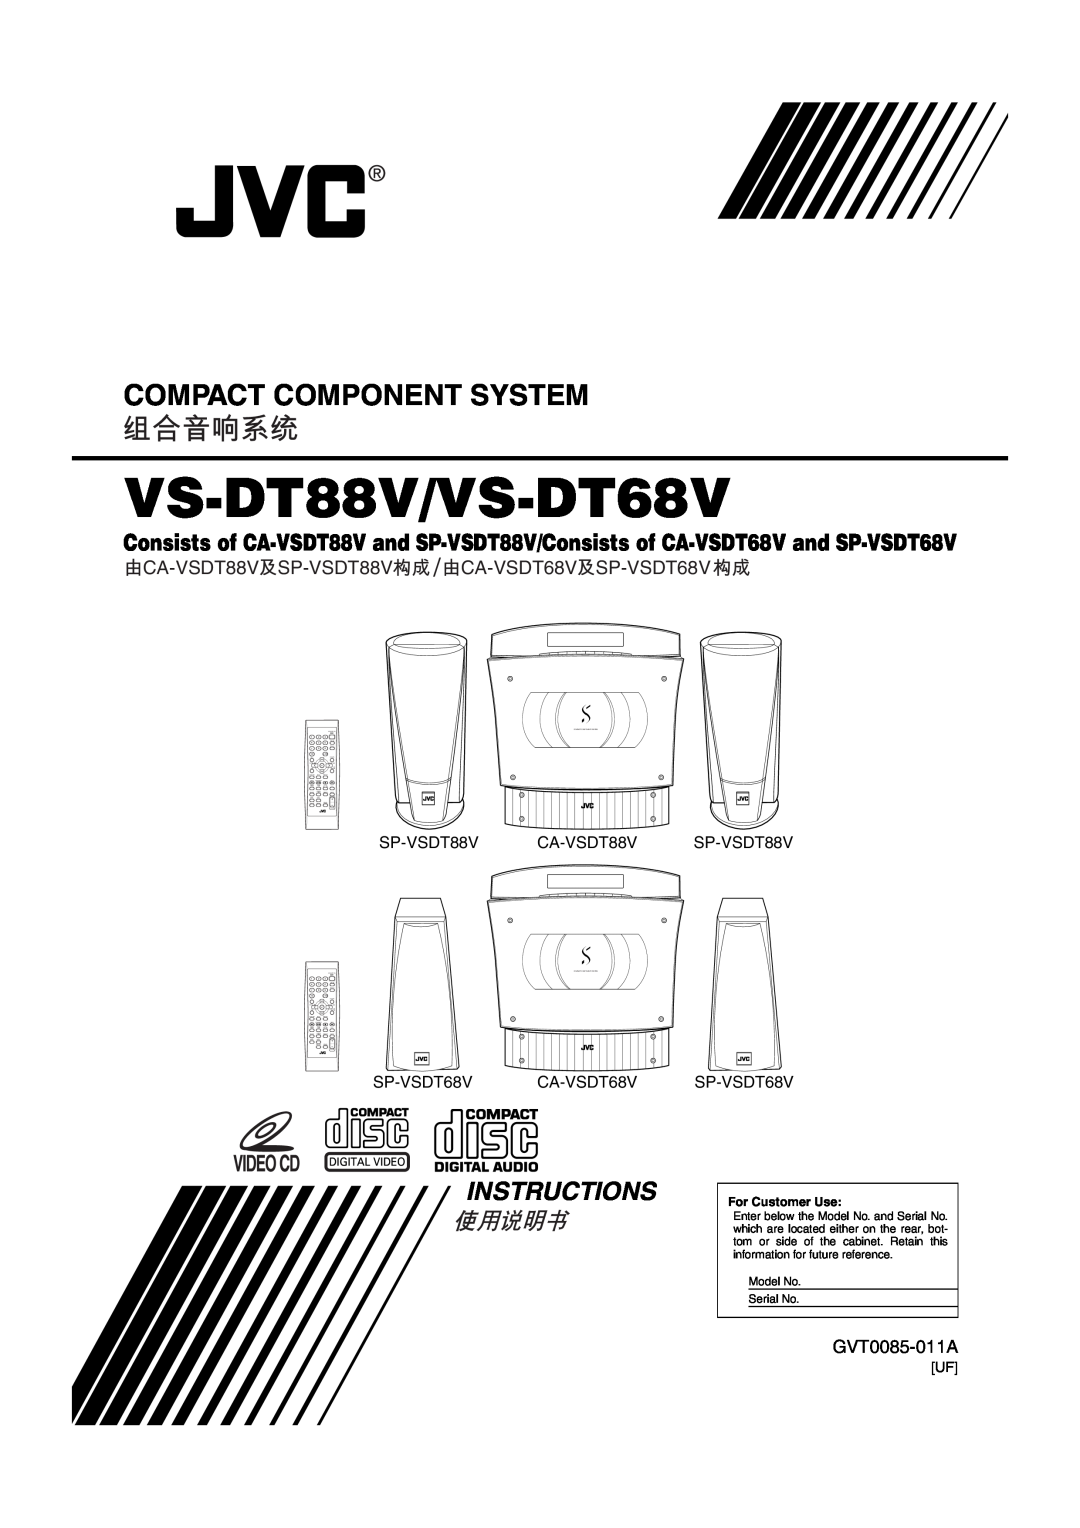 JVC manual VS-DT88V/VS-DT68V, Compact Component System, Instructions, CA-VSDT88VSP-VSDT88V/ CA-VSDT68VSP-VSDT68V 